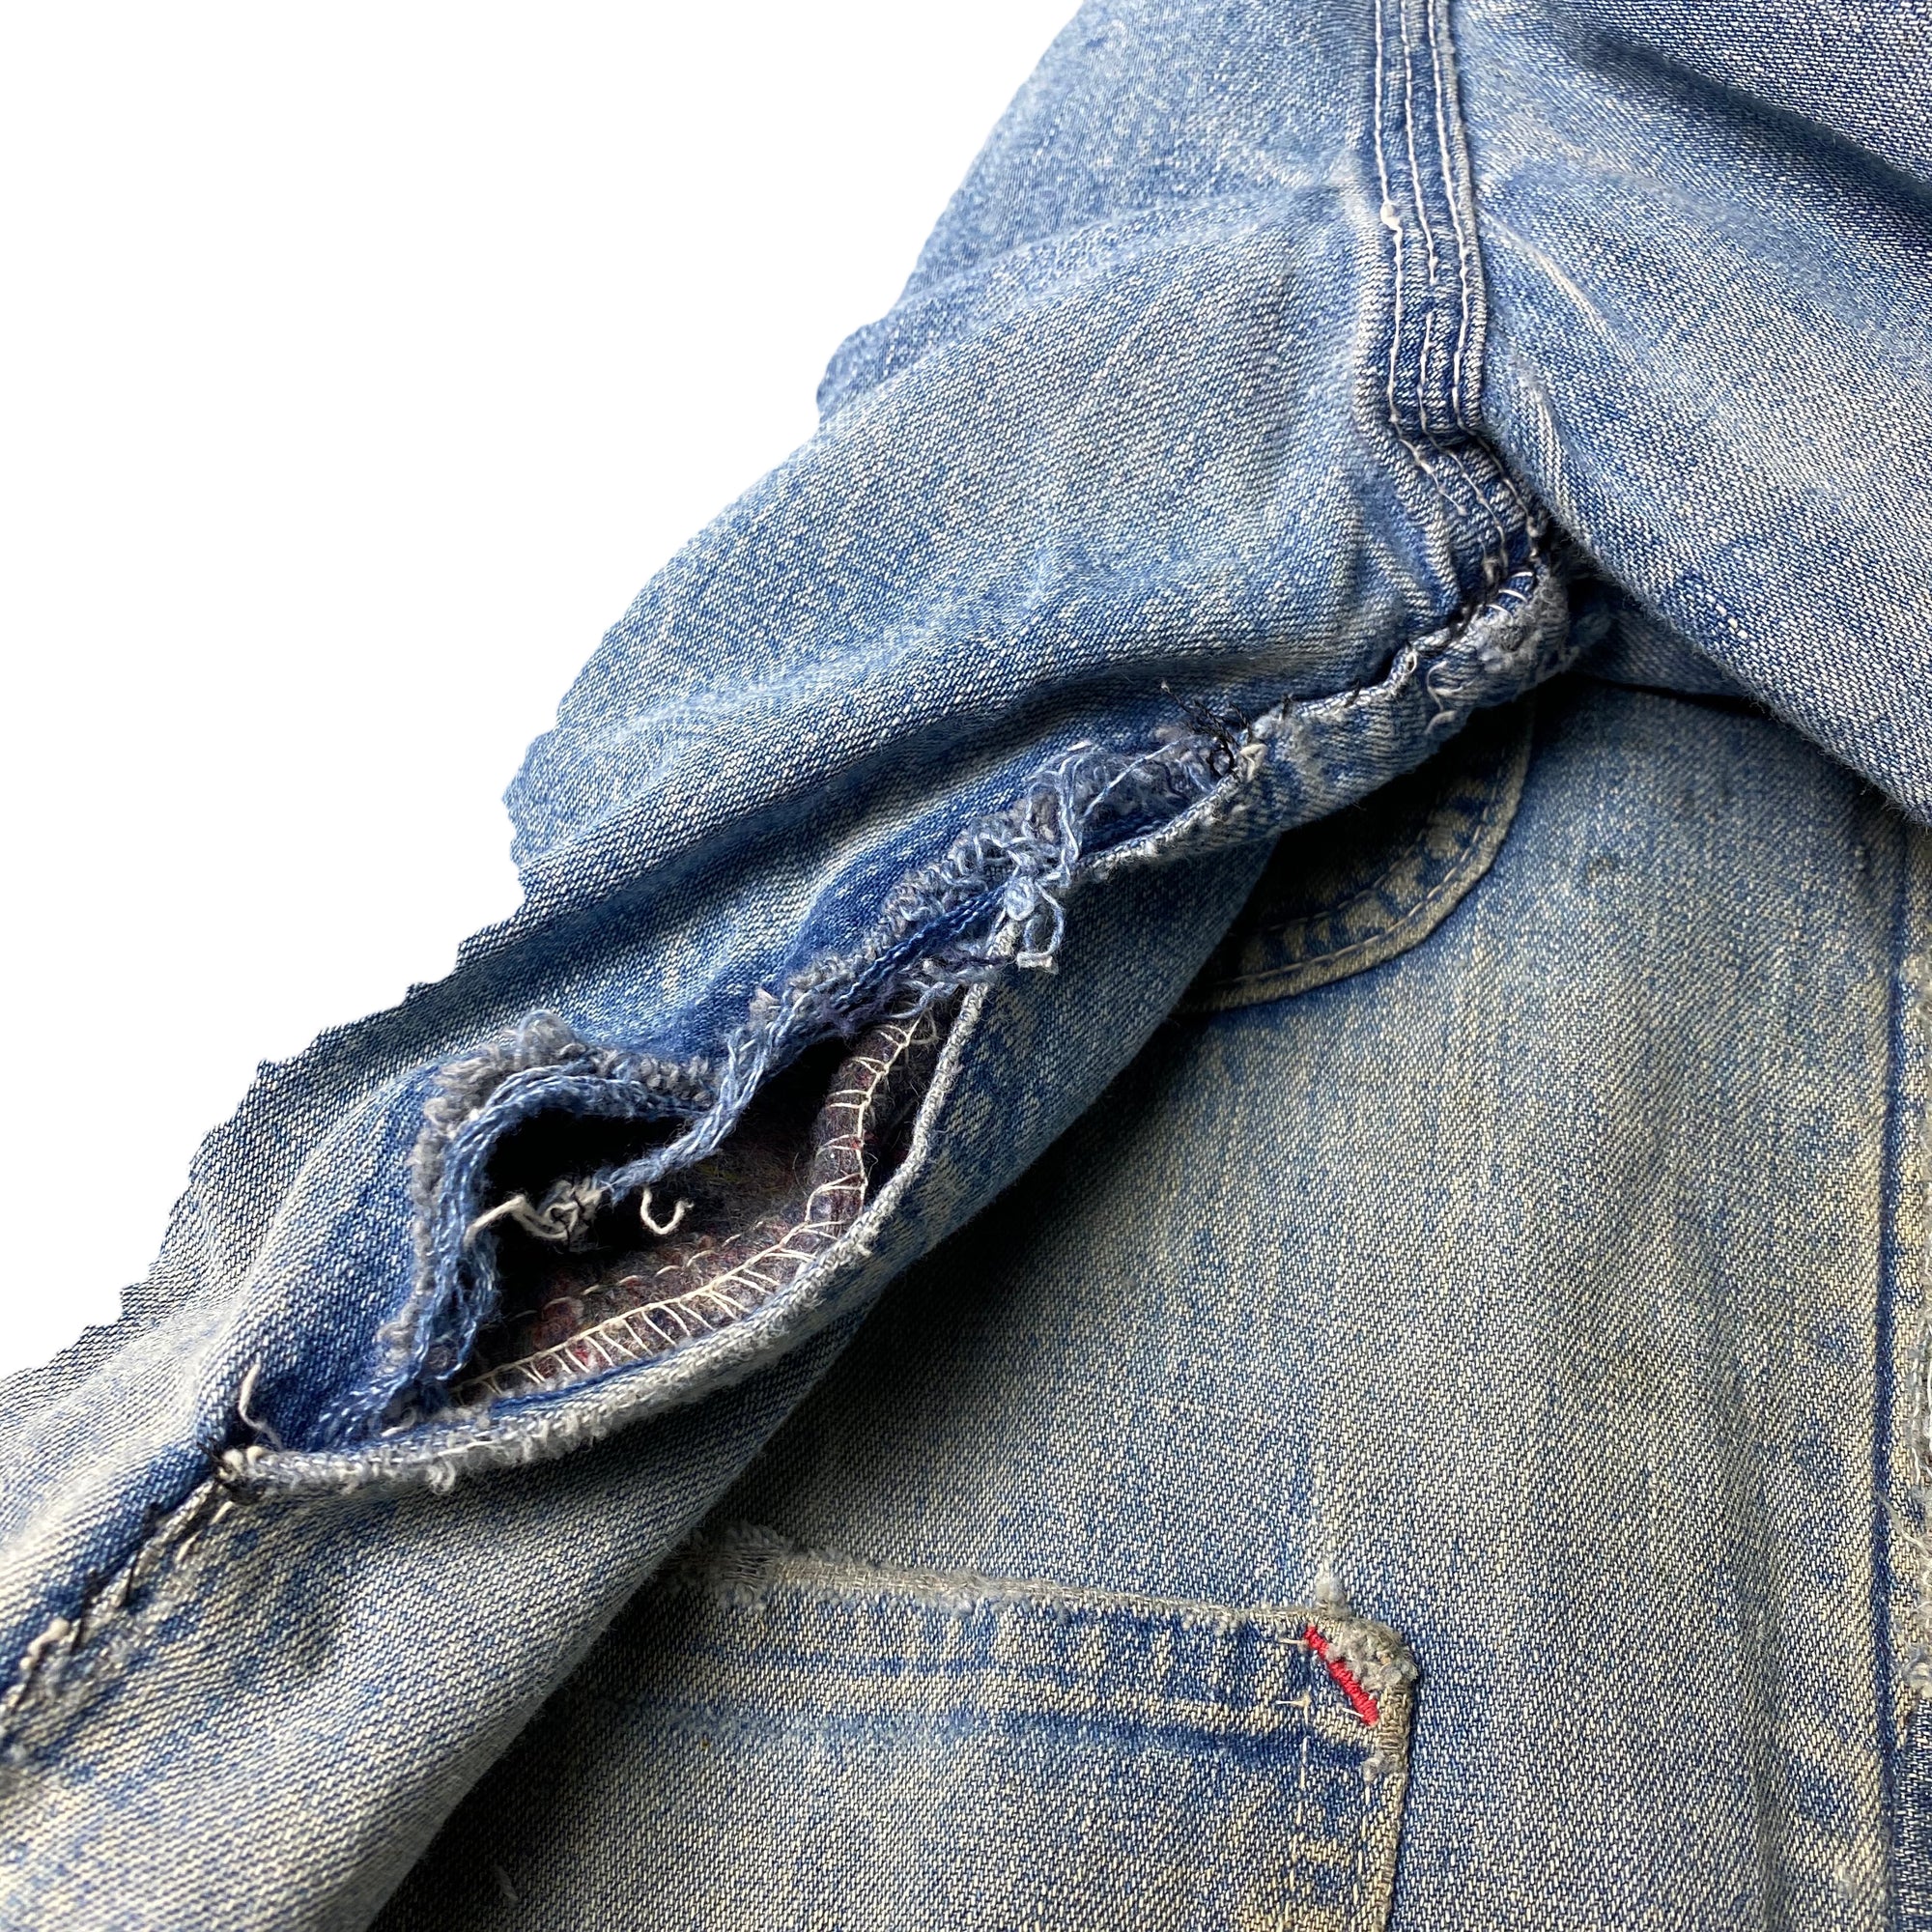 sears 501 jeans